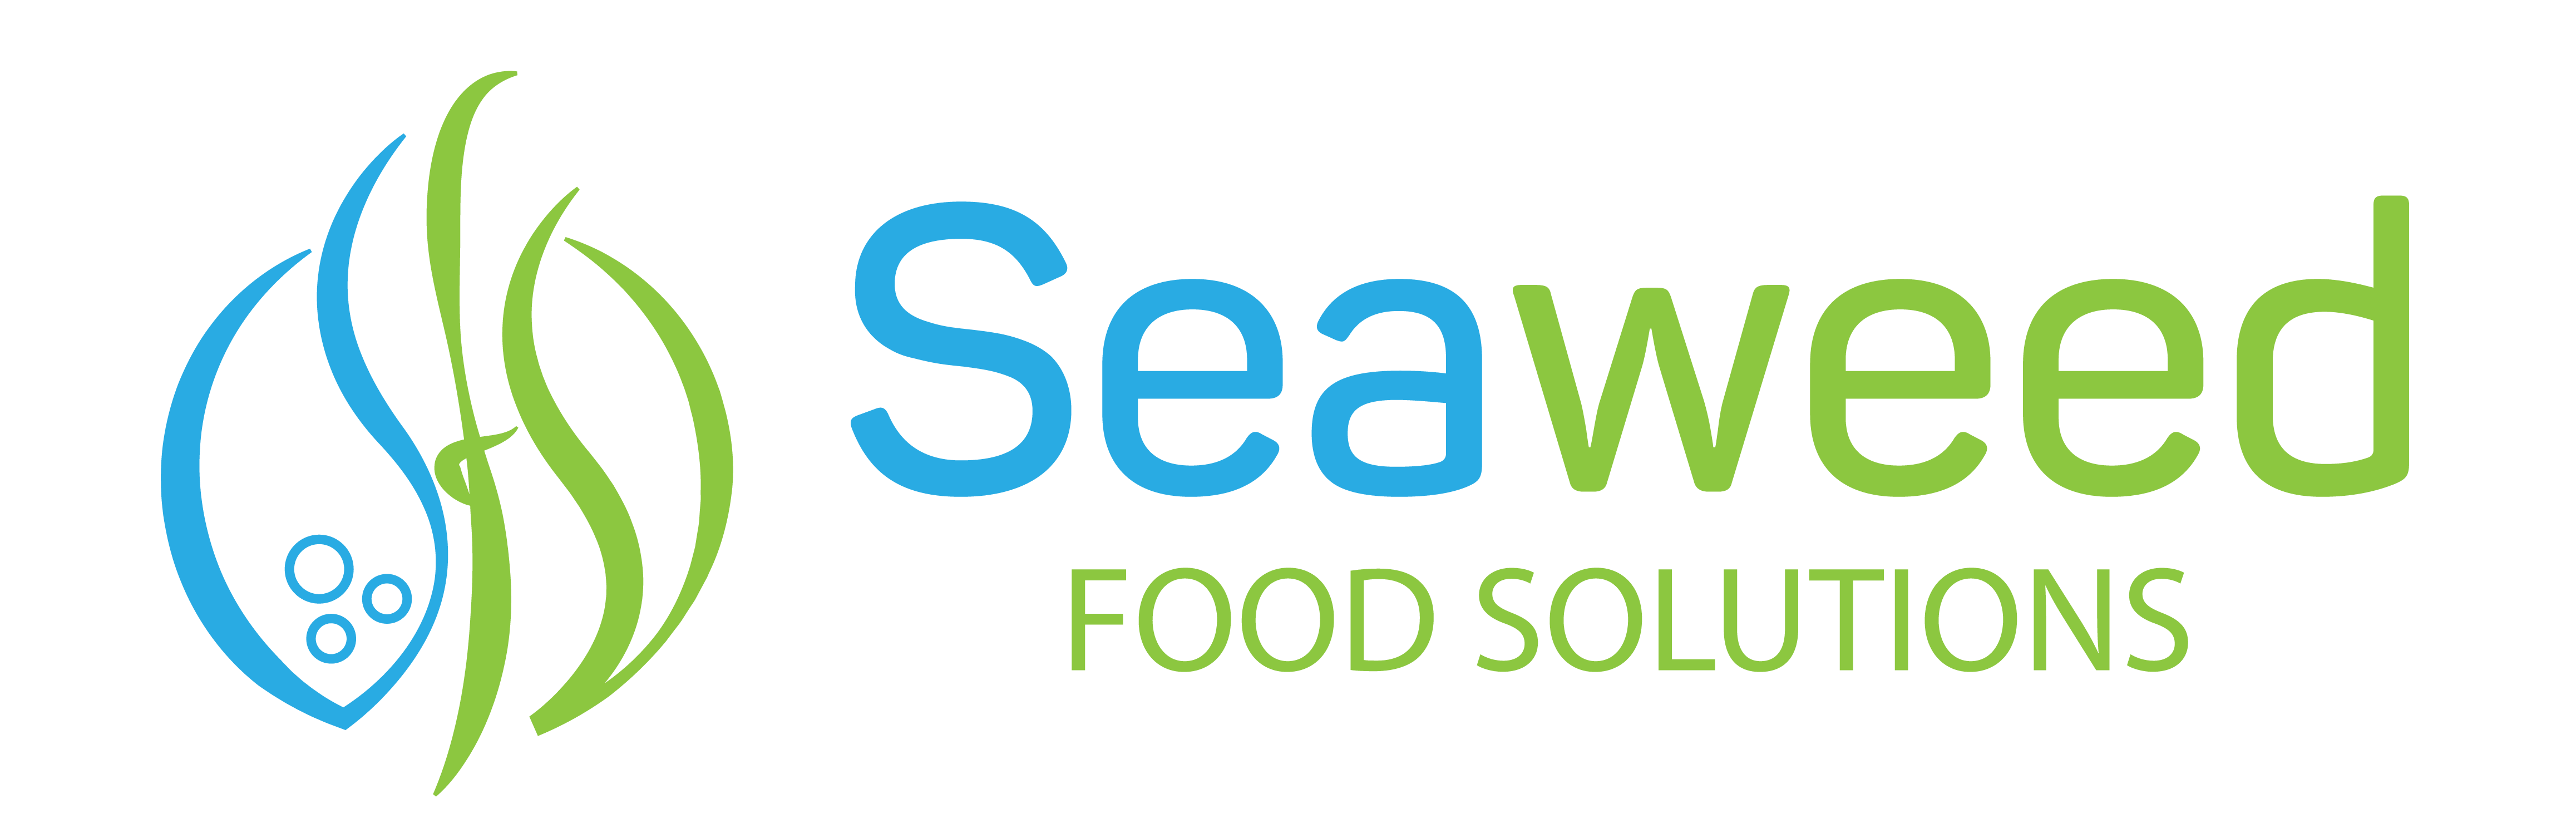 Seaweedfoodsolutions.com